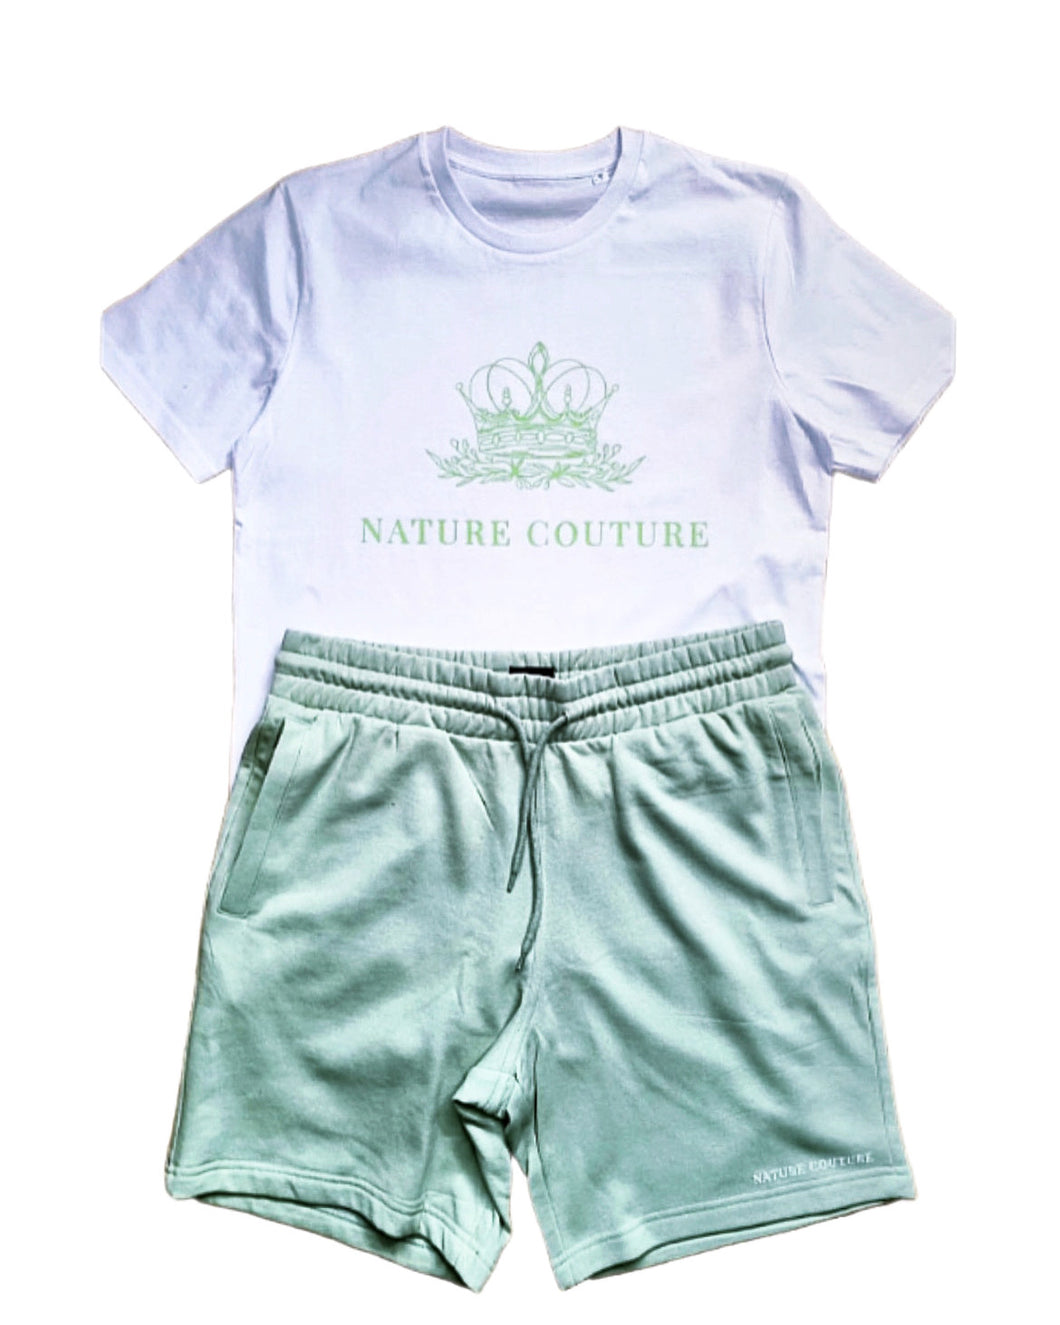 Nature Couture - Summer set - white tee